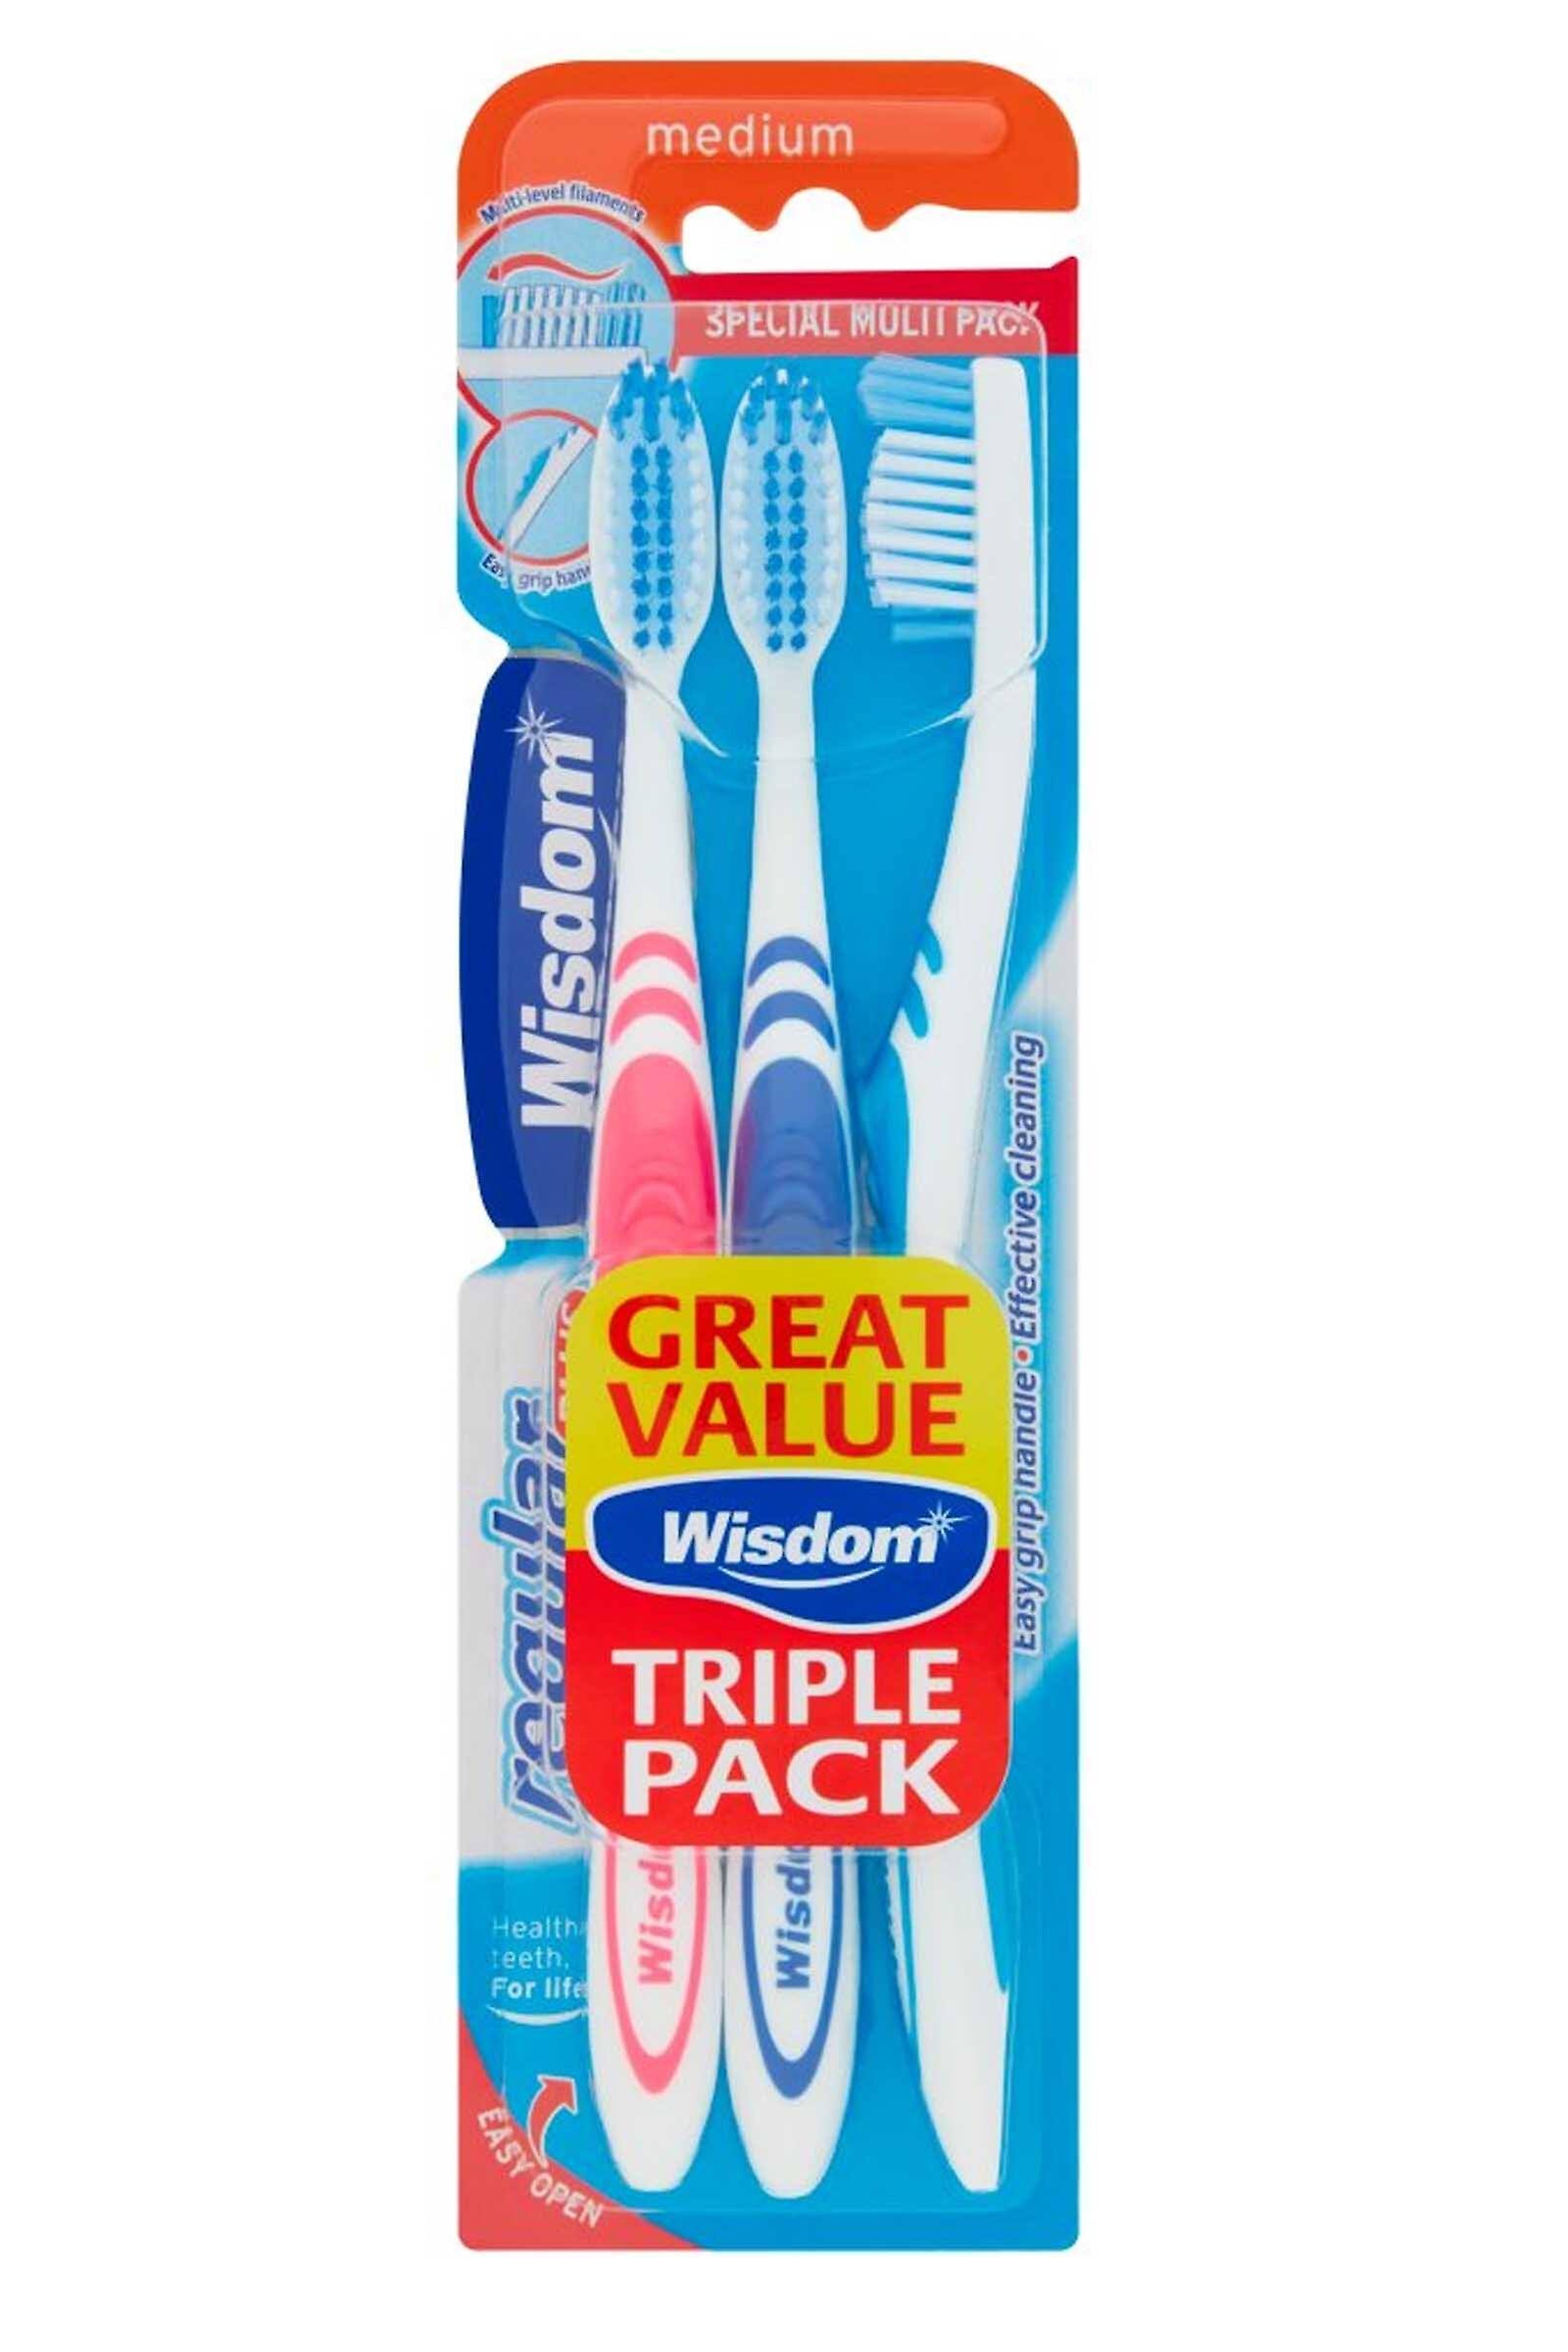 Wisdom Toothbrush - Medium, Triple Pack